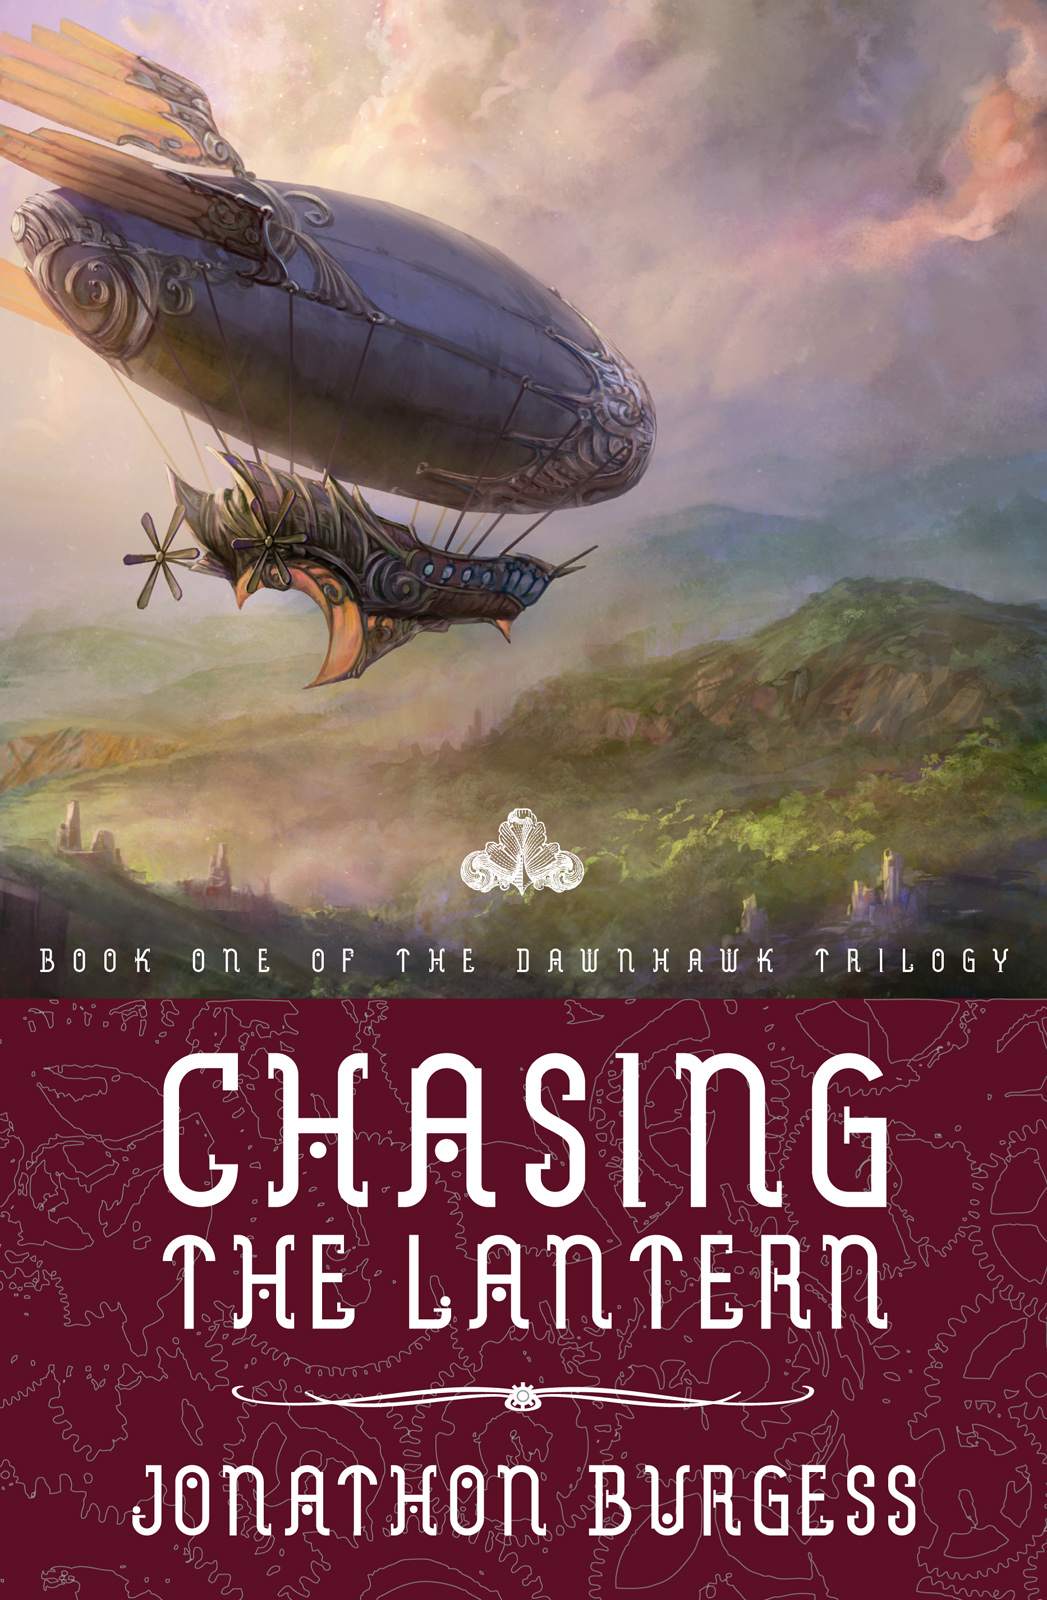 Chasing Lantern eBook.jpg